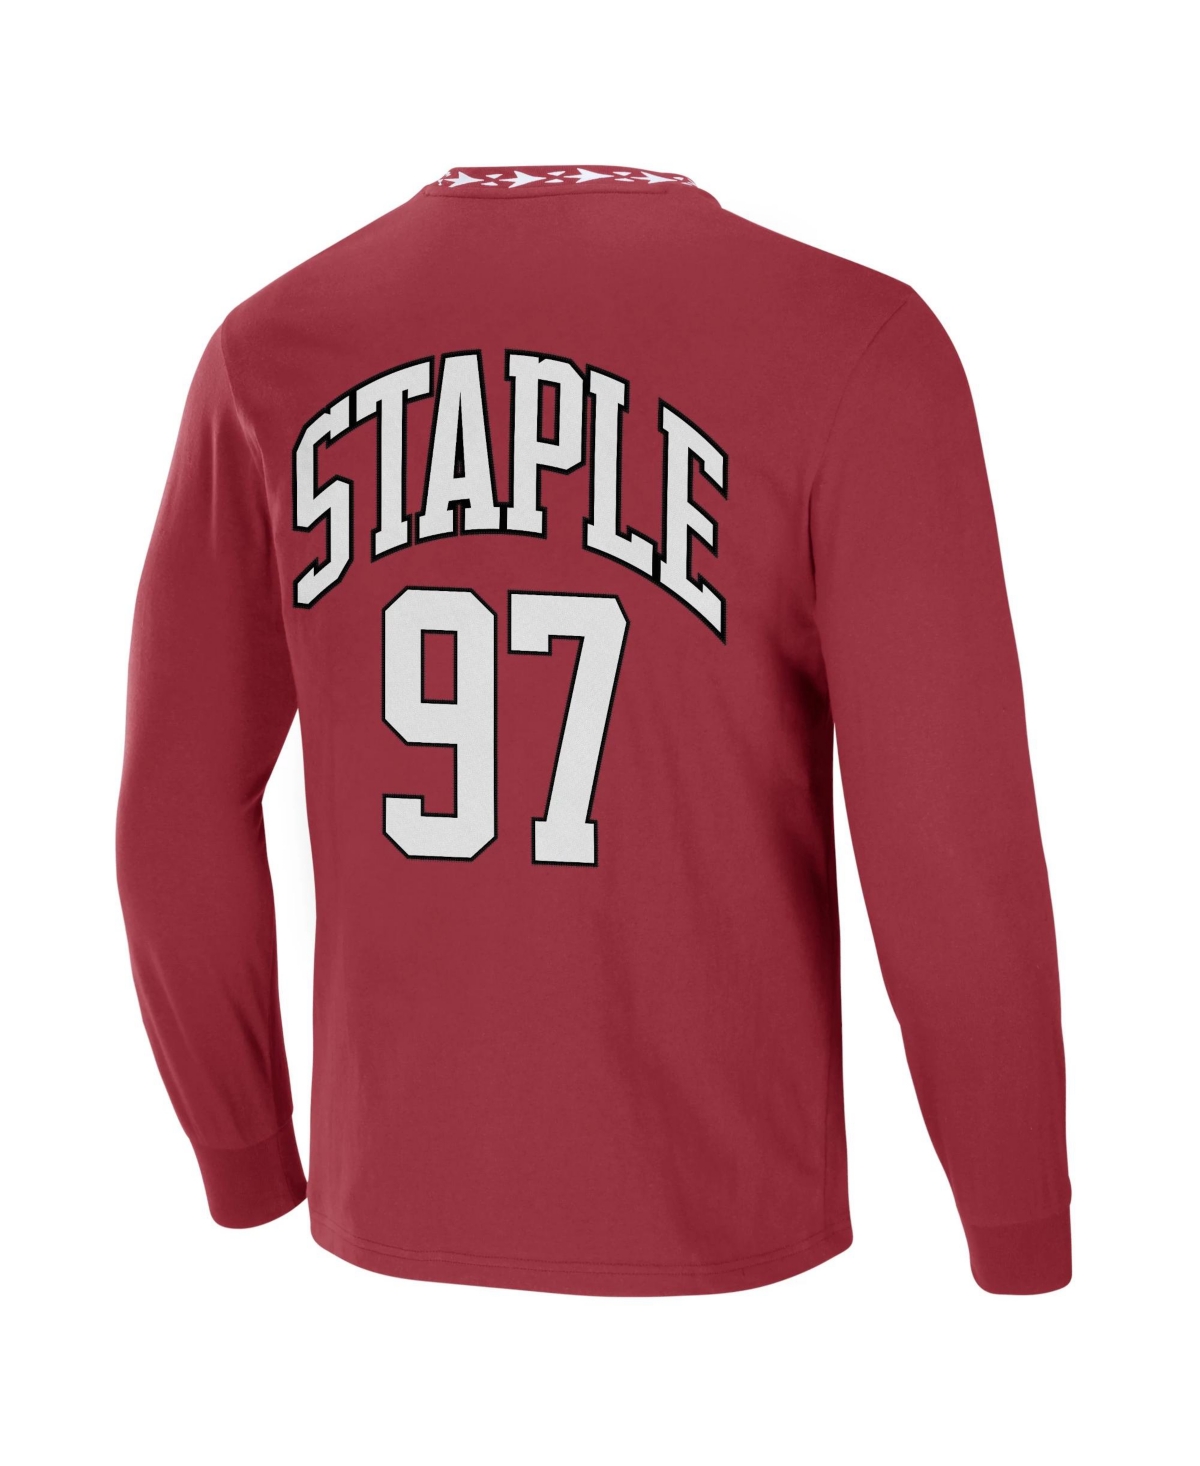 Shop Nfl Properties Men's Nfl X Staple Red Arizona Cardinals Core Long Sleeve Jersey Style T-shirt